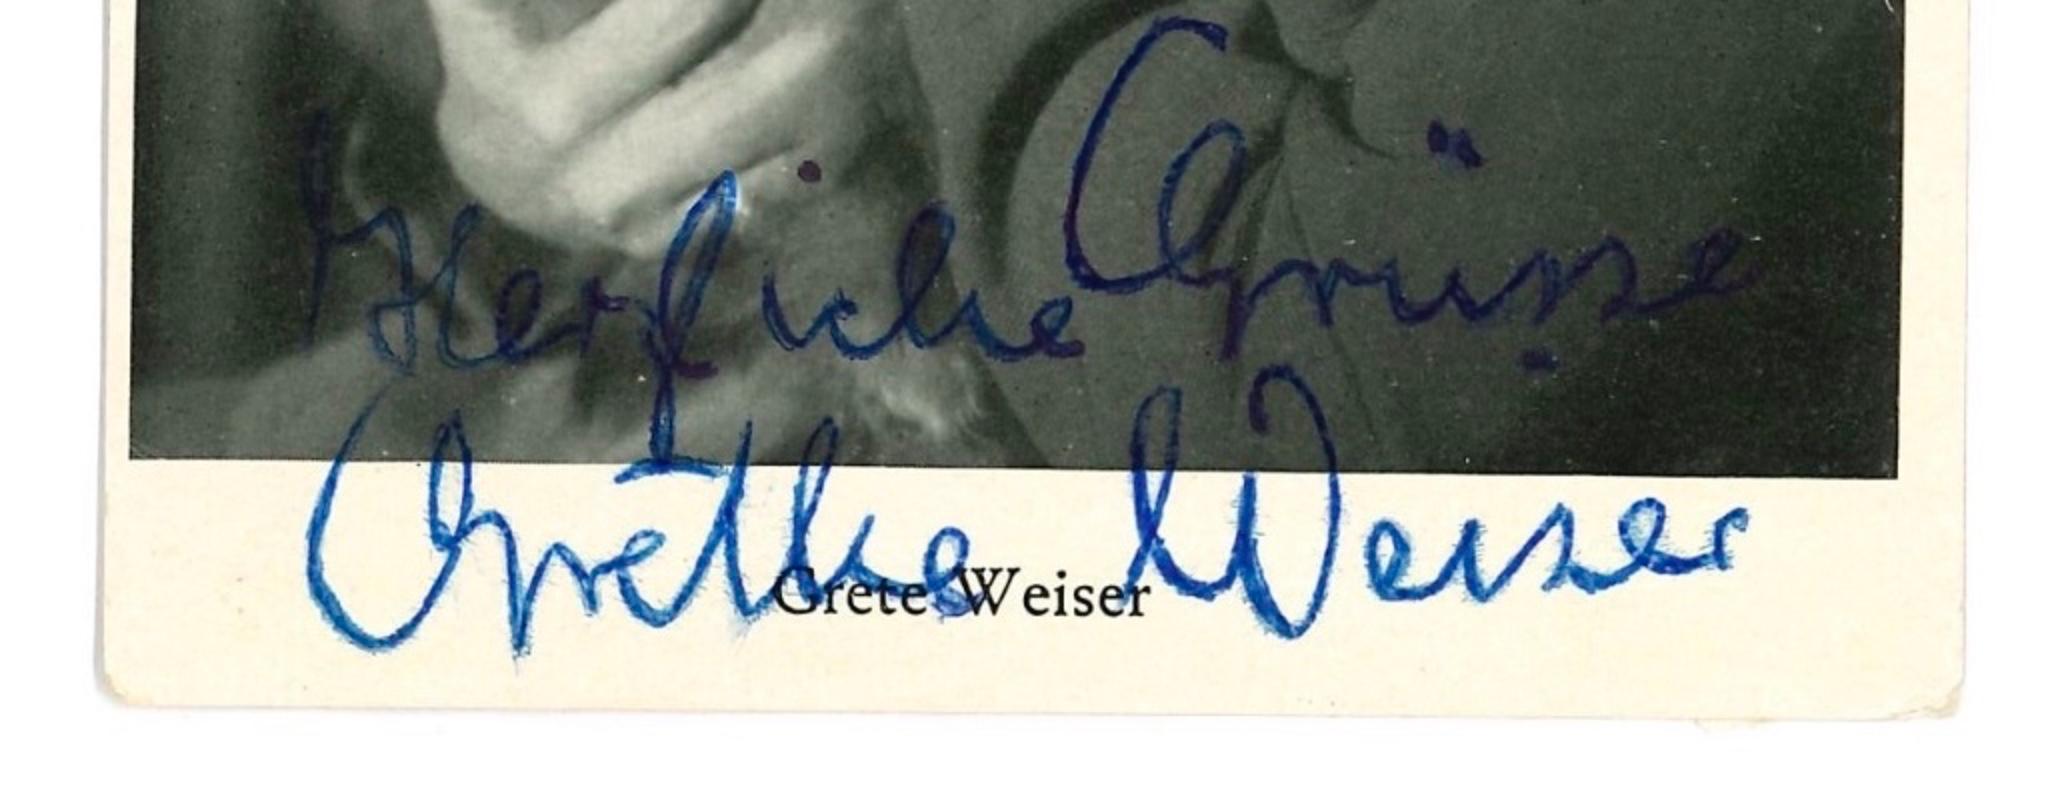 Autographed Portrait of Grete Weiser - Vintage b/w Postcard - 1960s - Photograph by Unknown